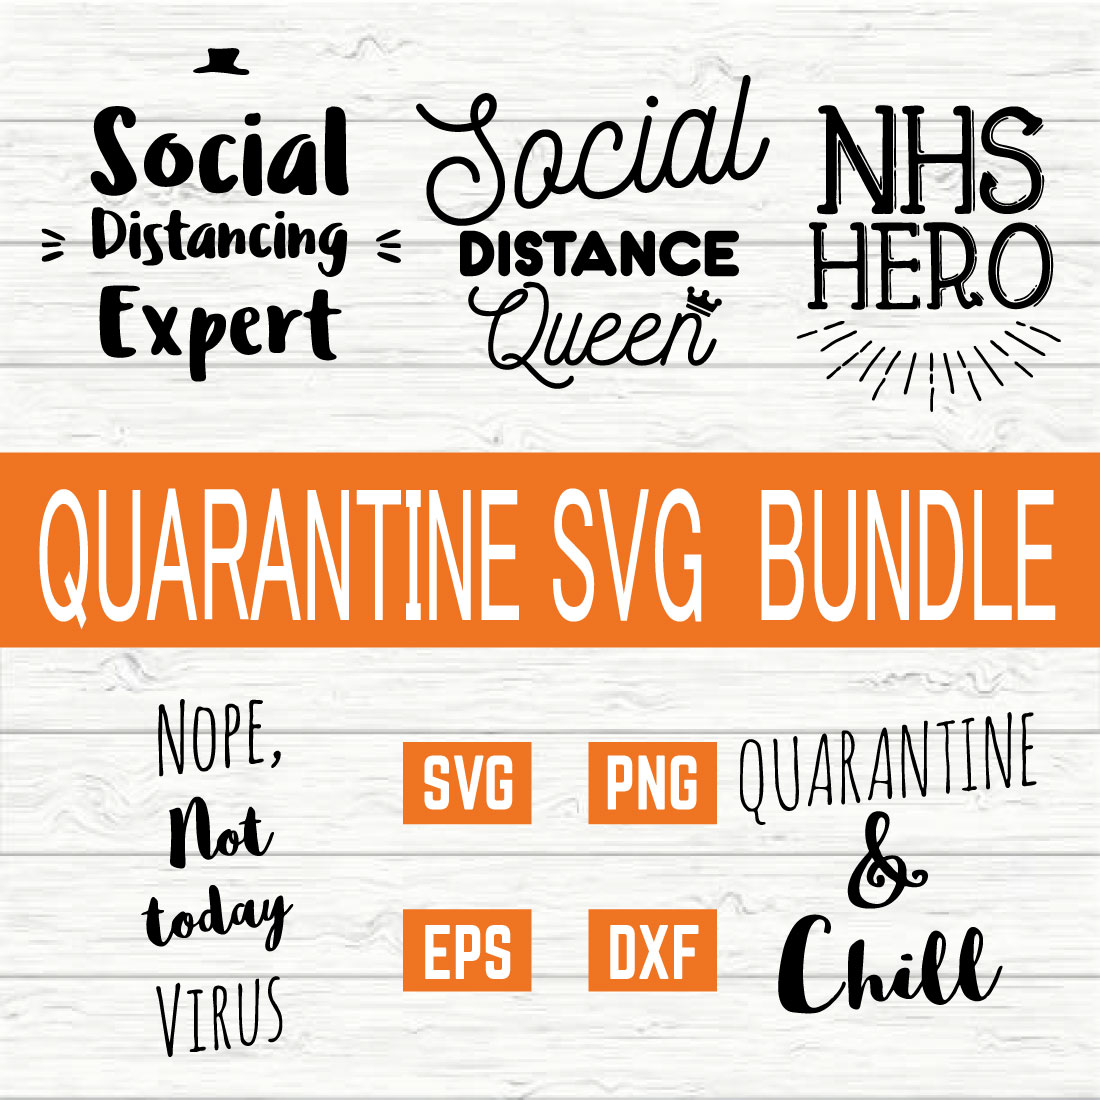 Quarantine Typography Bundle vol 3 preview image.